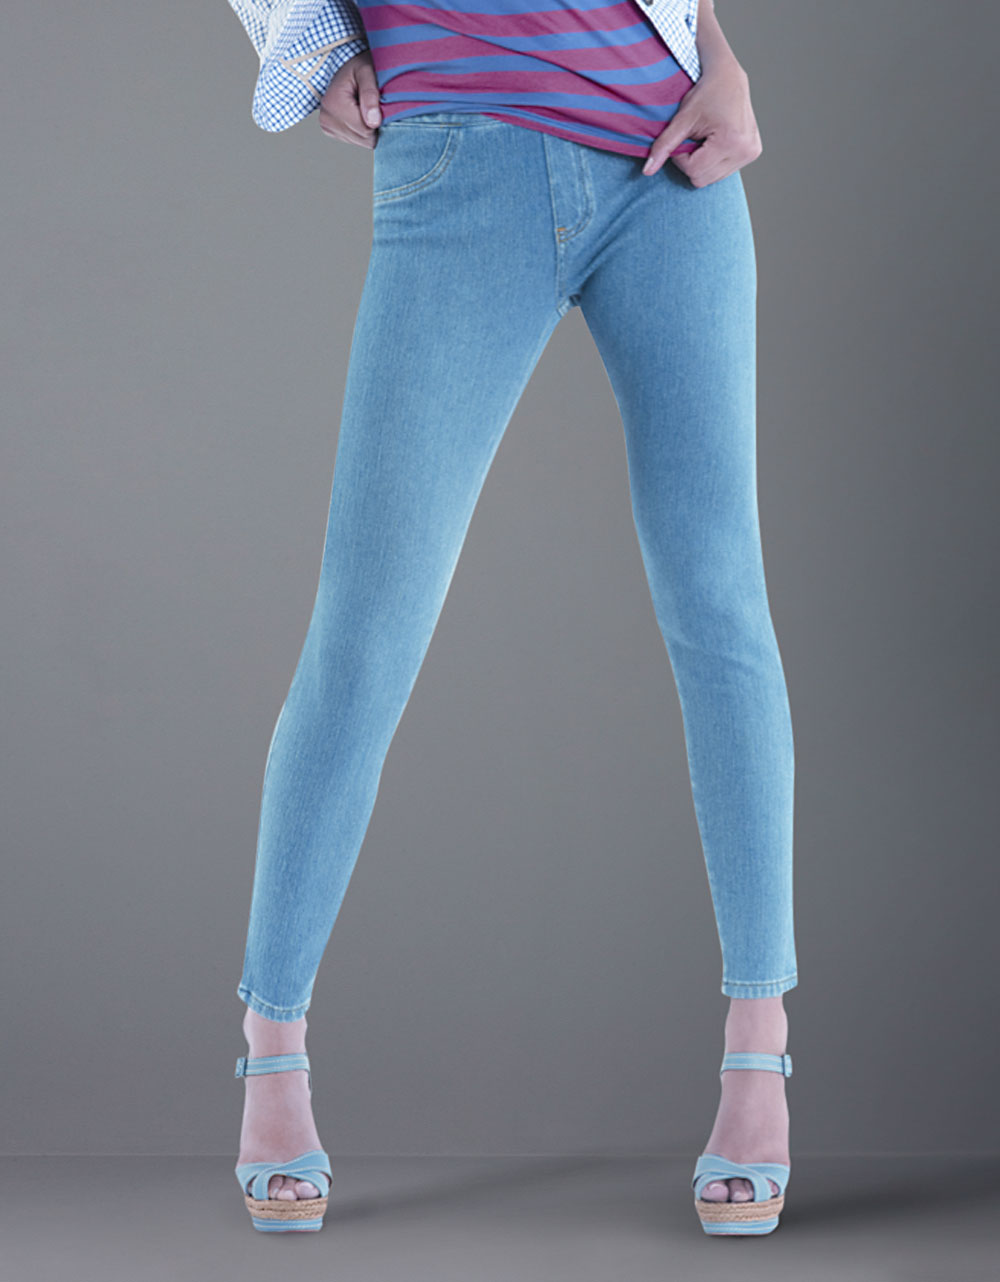 https://cdna.lystit.com/photos/2011/09/17/hue-lt-denim-classic-jean-leggings-product-1-2069976-967236872.jpeg